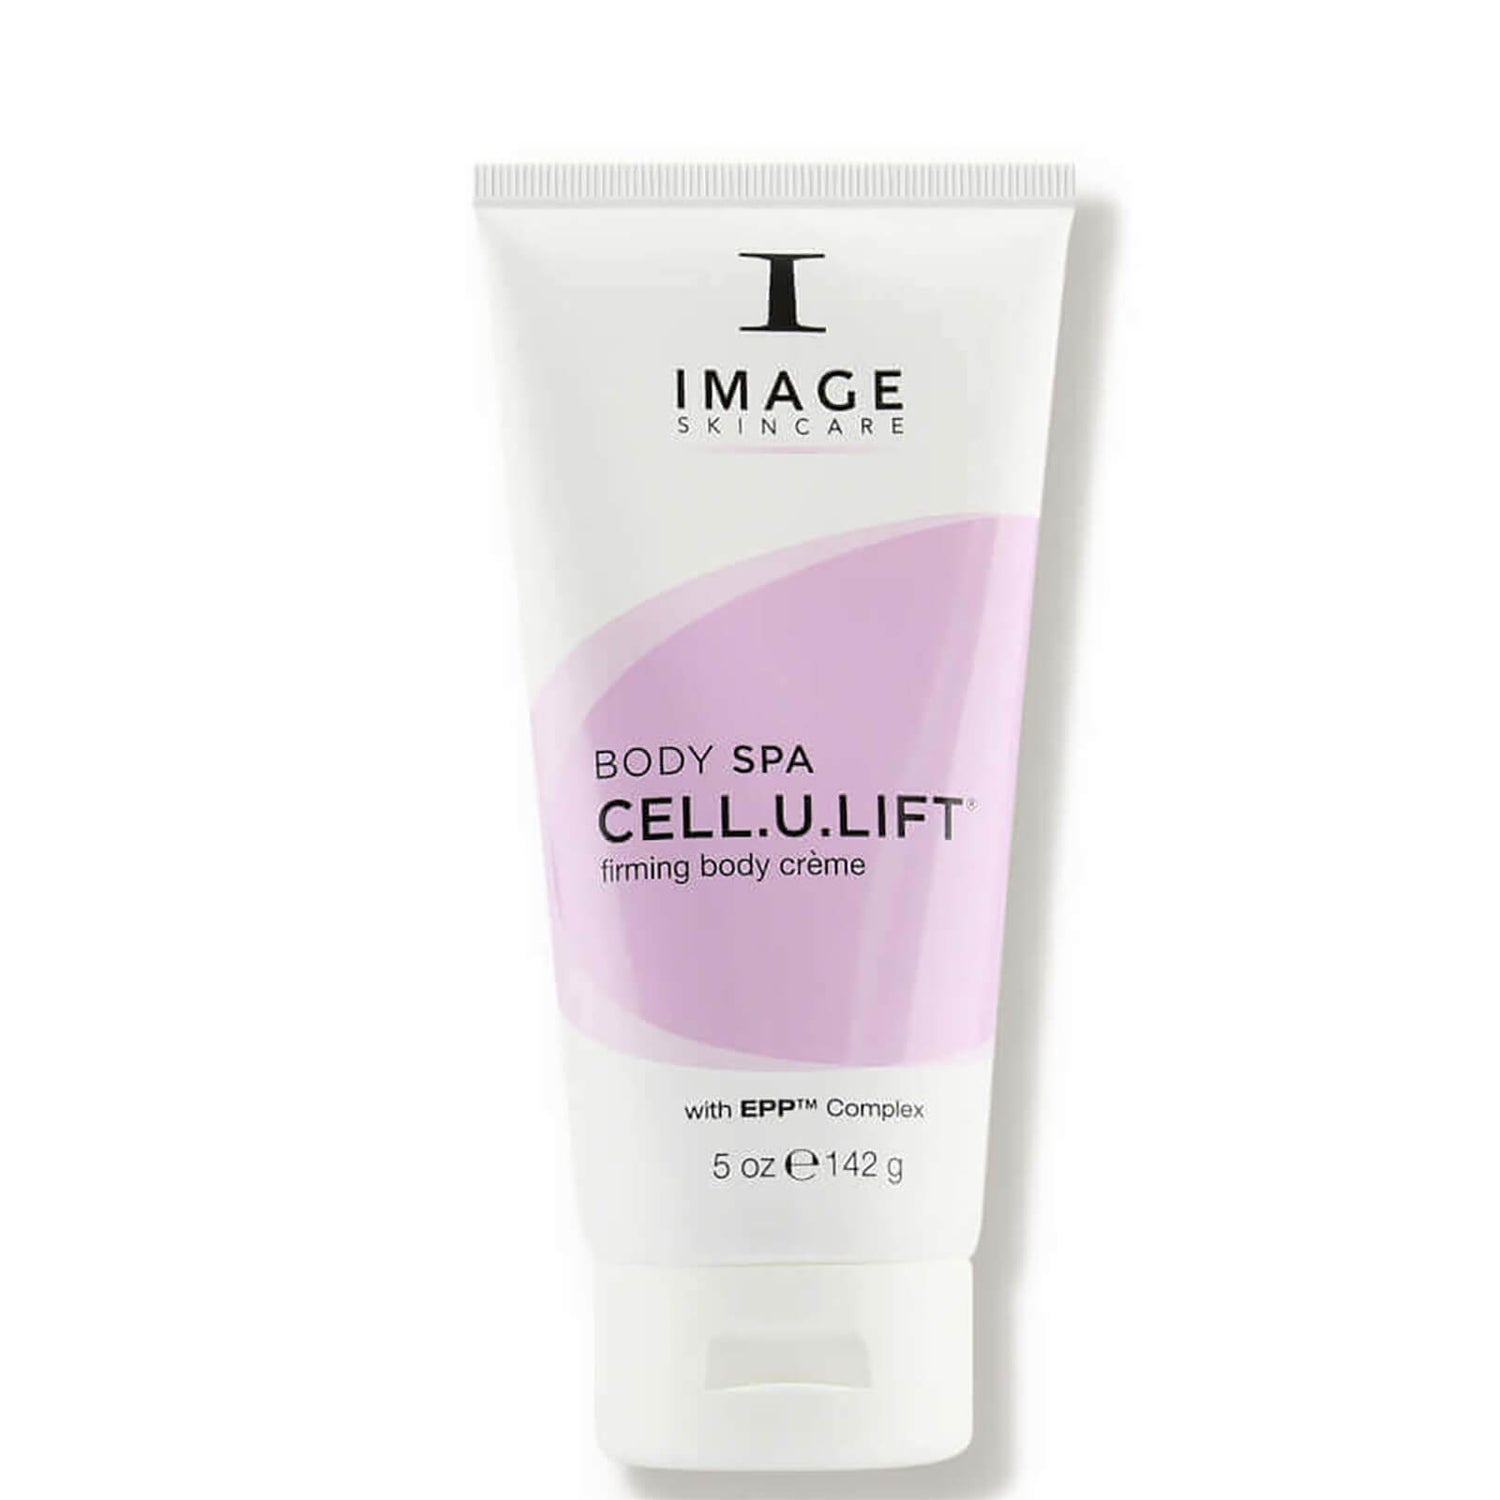 IMAGE Skincare BODY SPA CELL.U.LIFT Firming Body Crème (5 oz.)